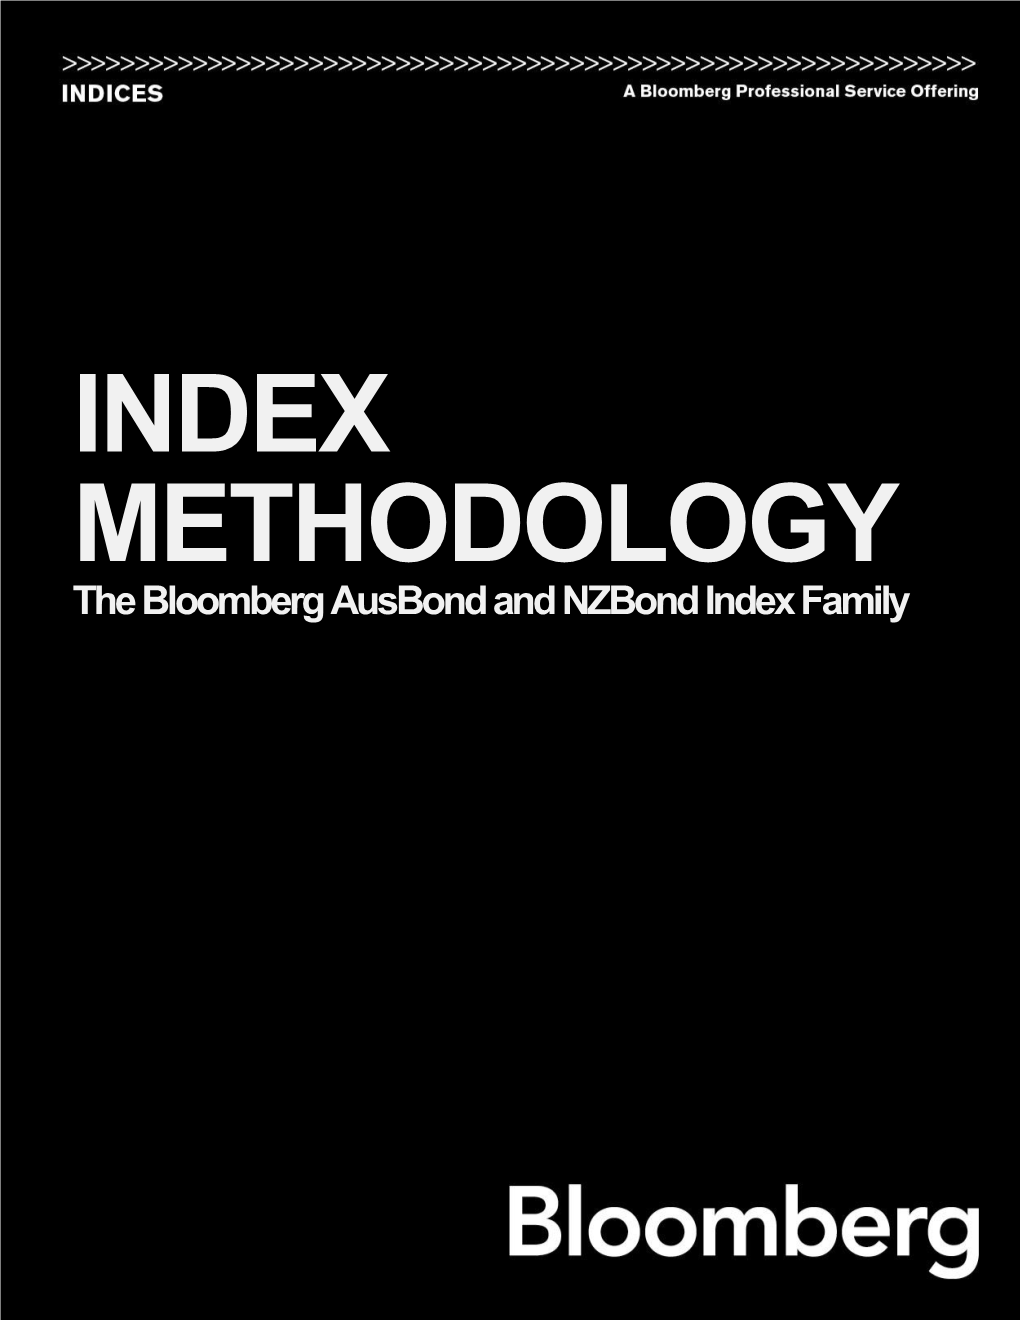 Index Methodology